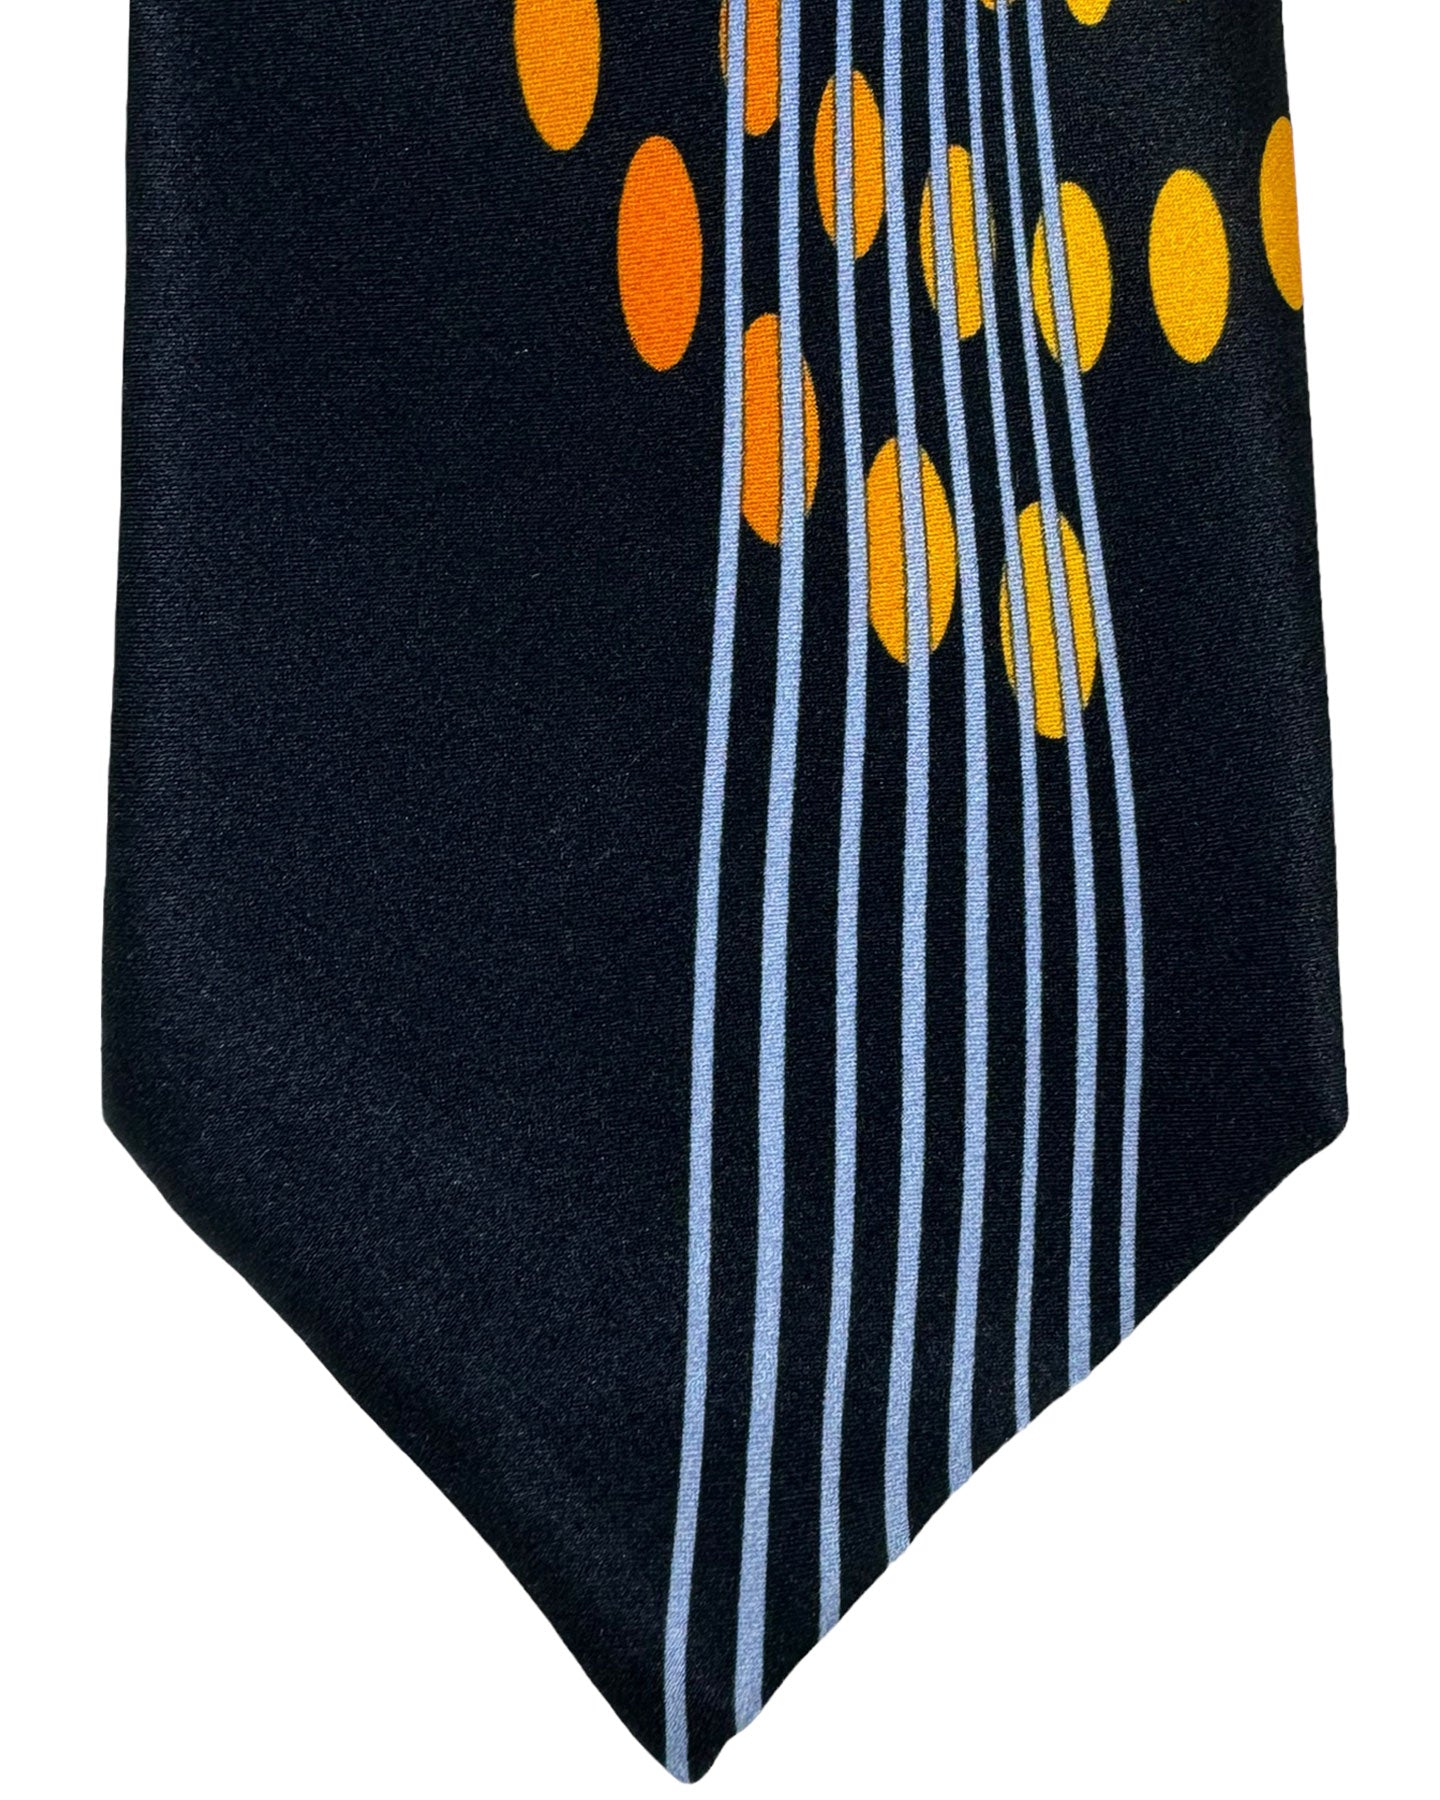 Vitaliano Pancaldi Silk Tie Black Royal Blue Orange Swirl Design